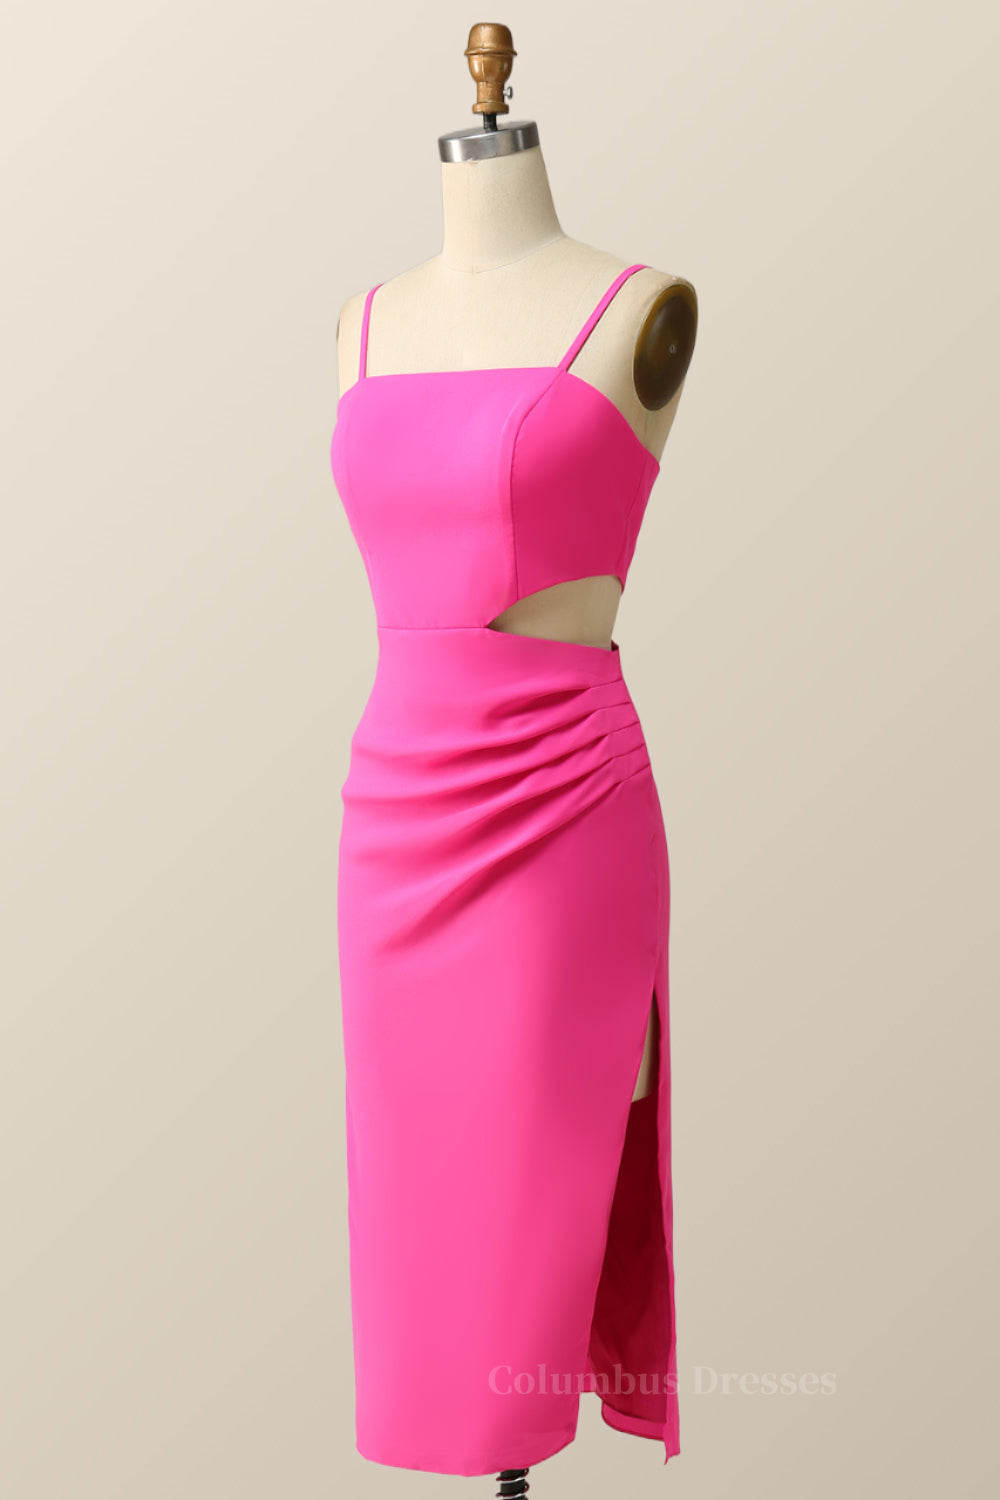 Senior Prom Dress, Straps Hot Pink Tight Draped Midi Dress with Keyhole